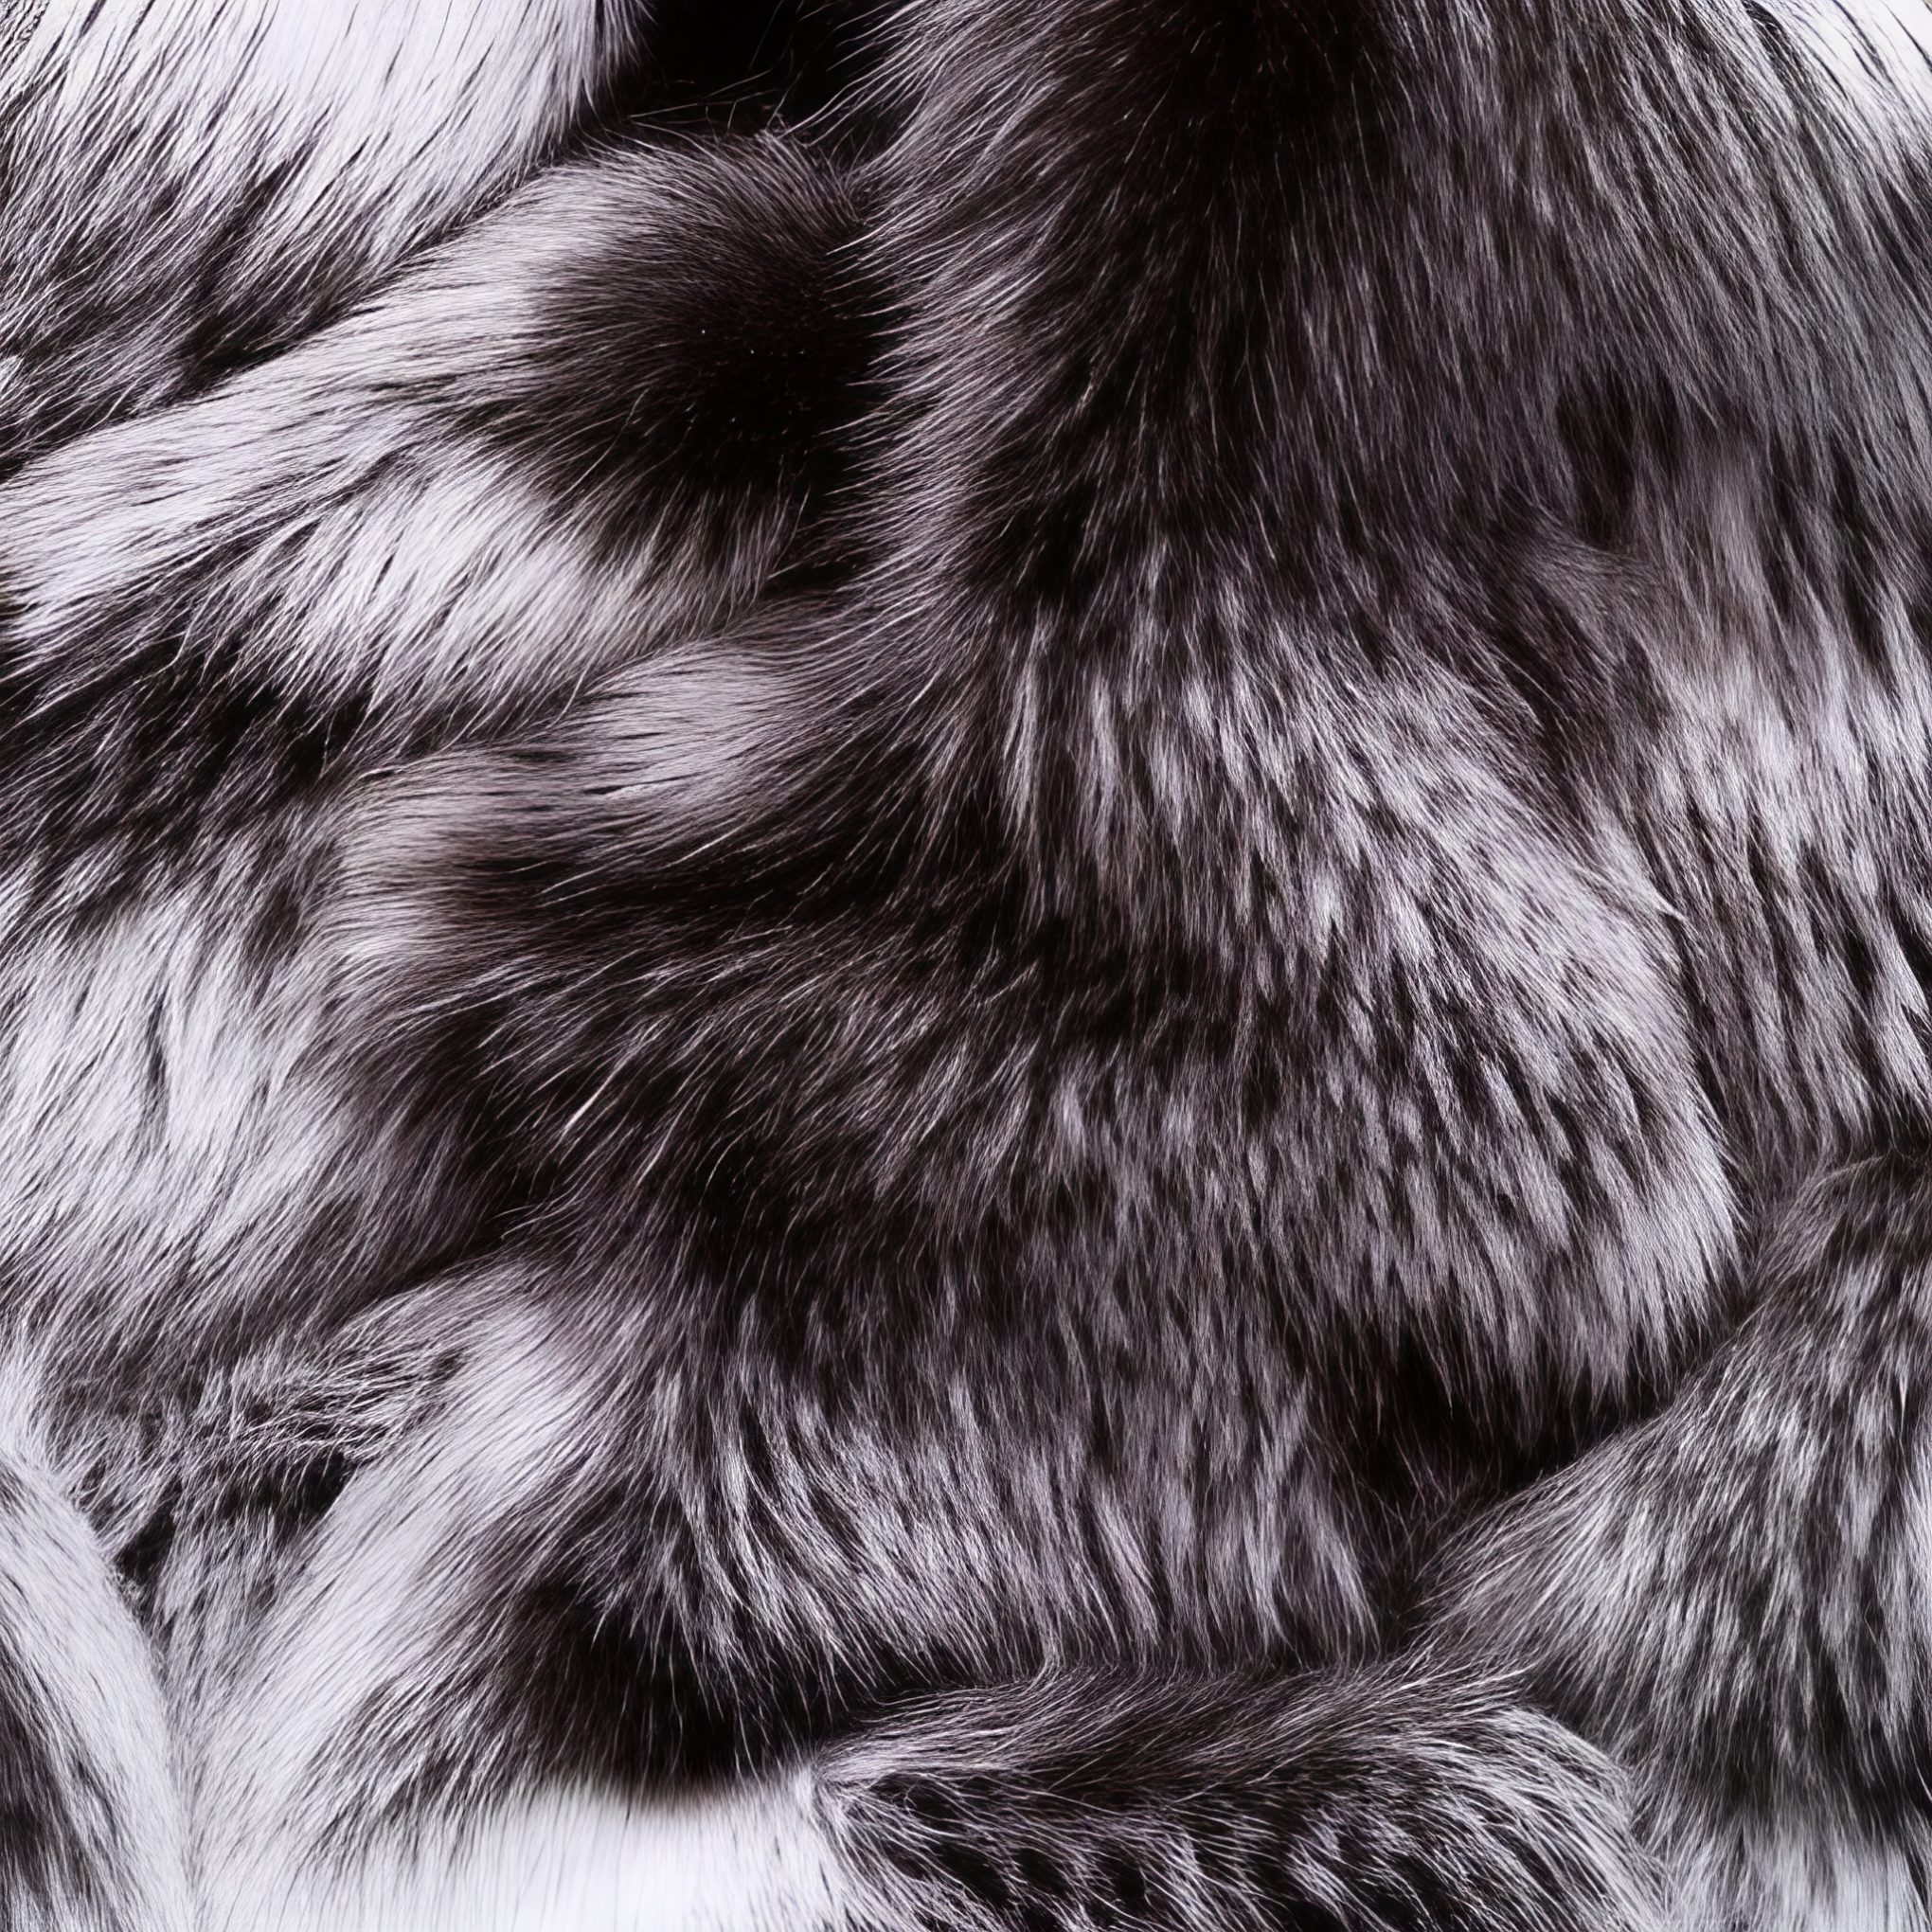 Royalty Free Stock Image of Chinchilla Fur close up, Free Download